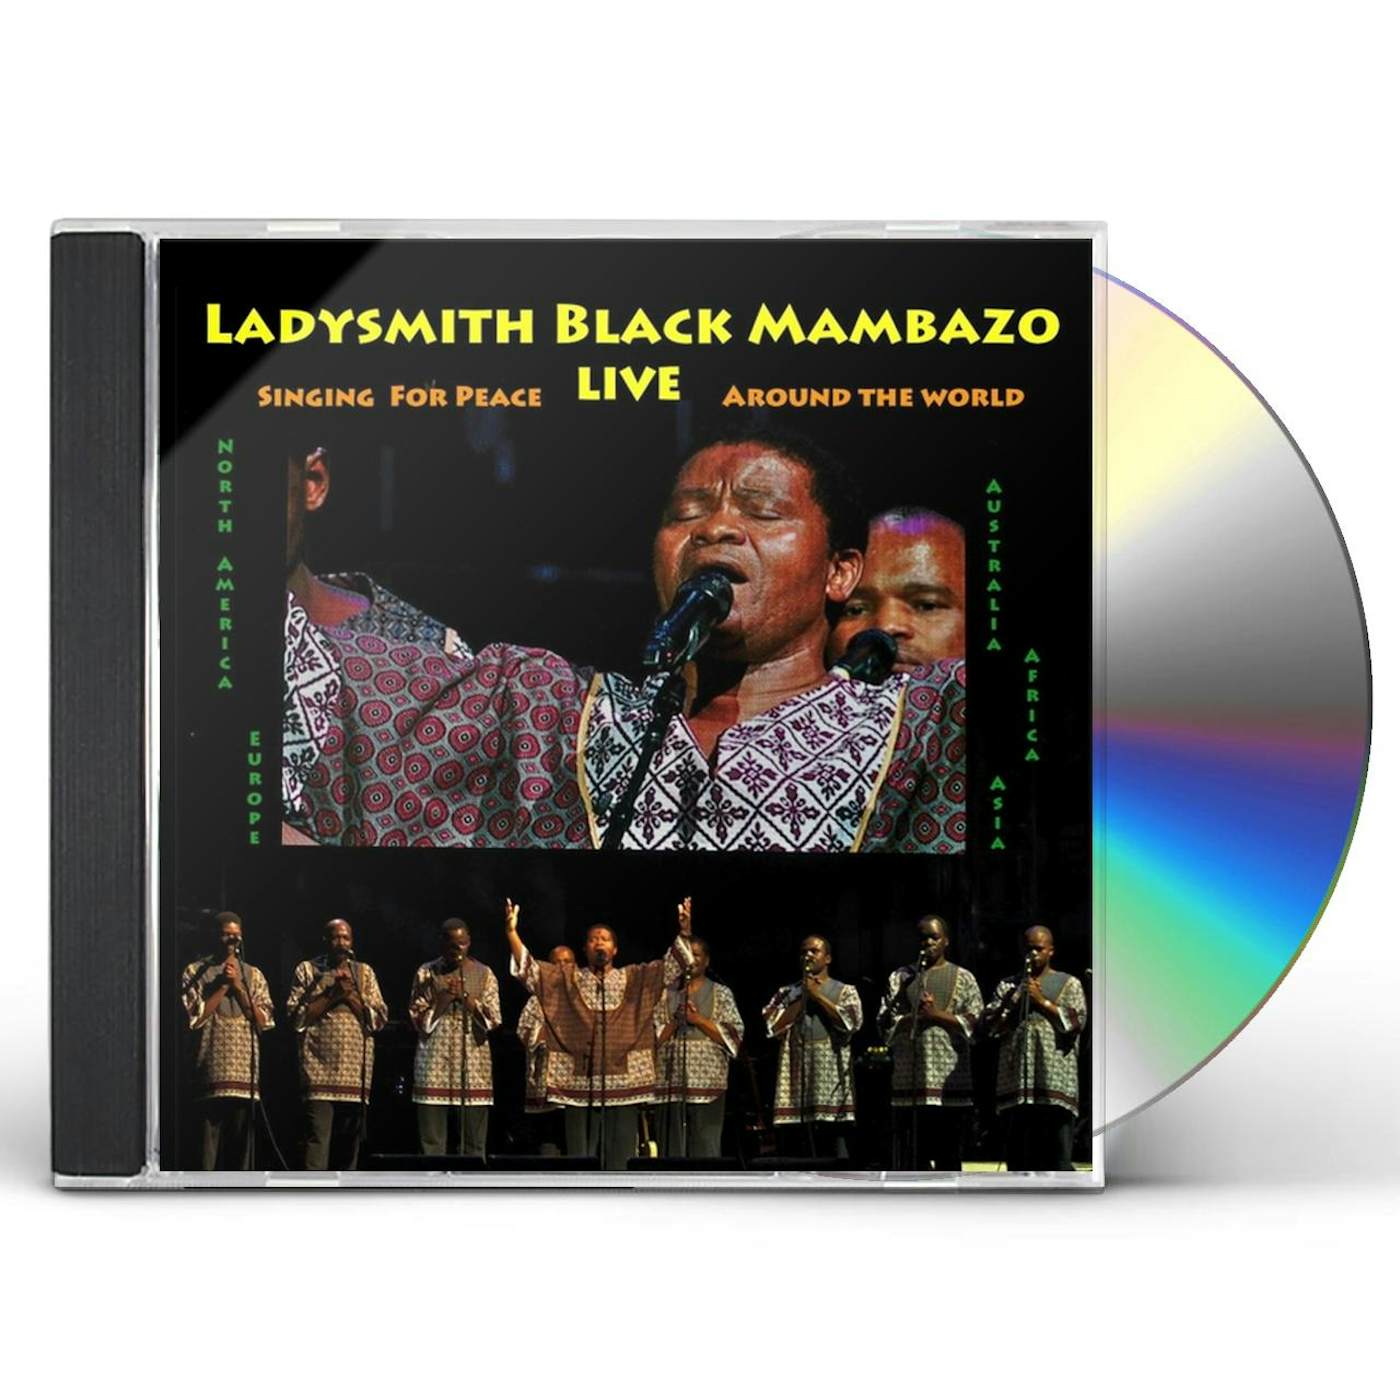 Ladysmith Black Mambazo SINGING FOR PEACE AROUND THE WORLD (LIVE) CD